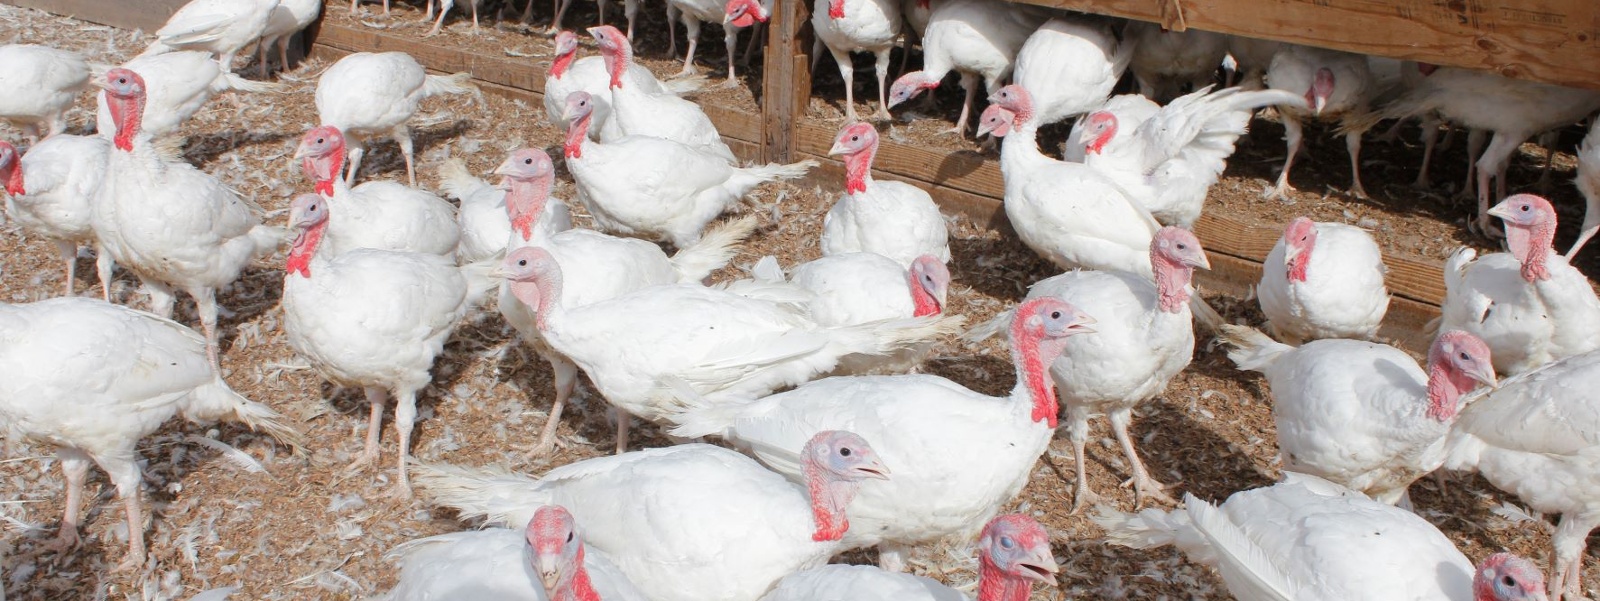 Avian influenza shortens supplies of holiday turkeys